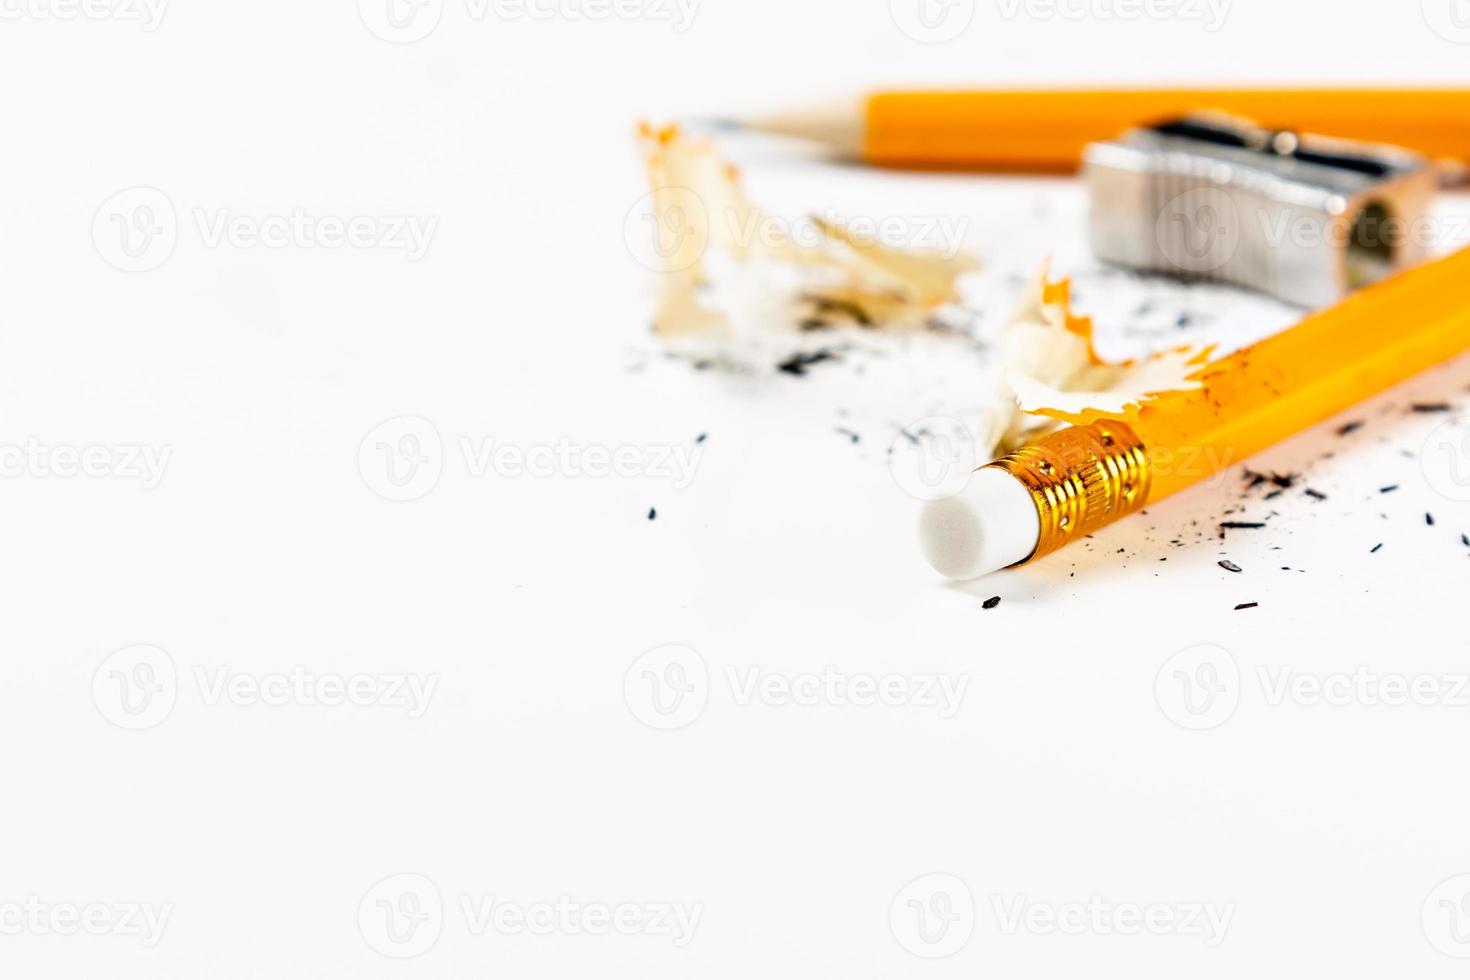 Pencil, metal sharpener and pencil shavings on white background. Horizontal image. photo